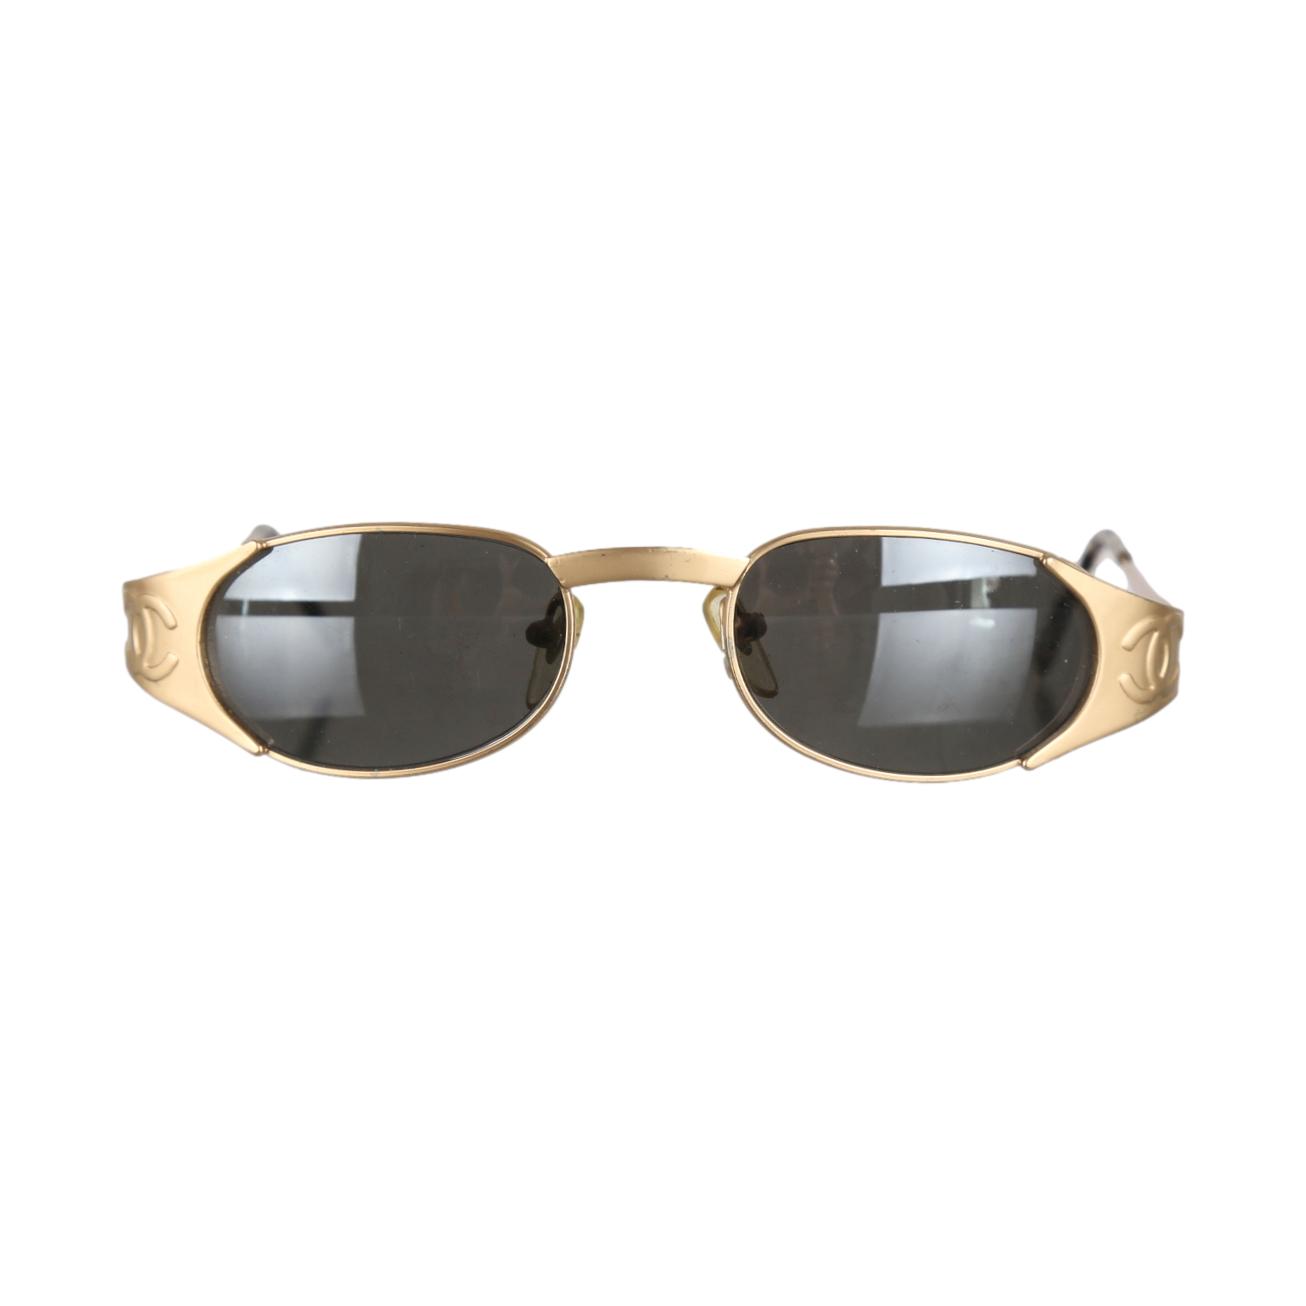 Chanel - Round Sunglasses - Gold - Chanel Eyewear - Avvenice